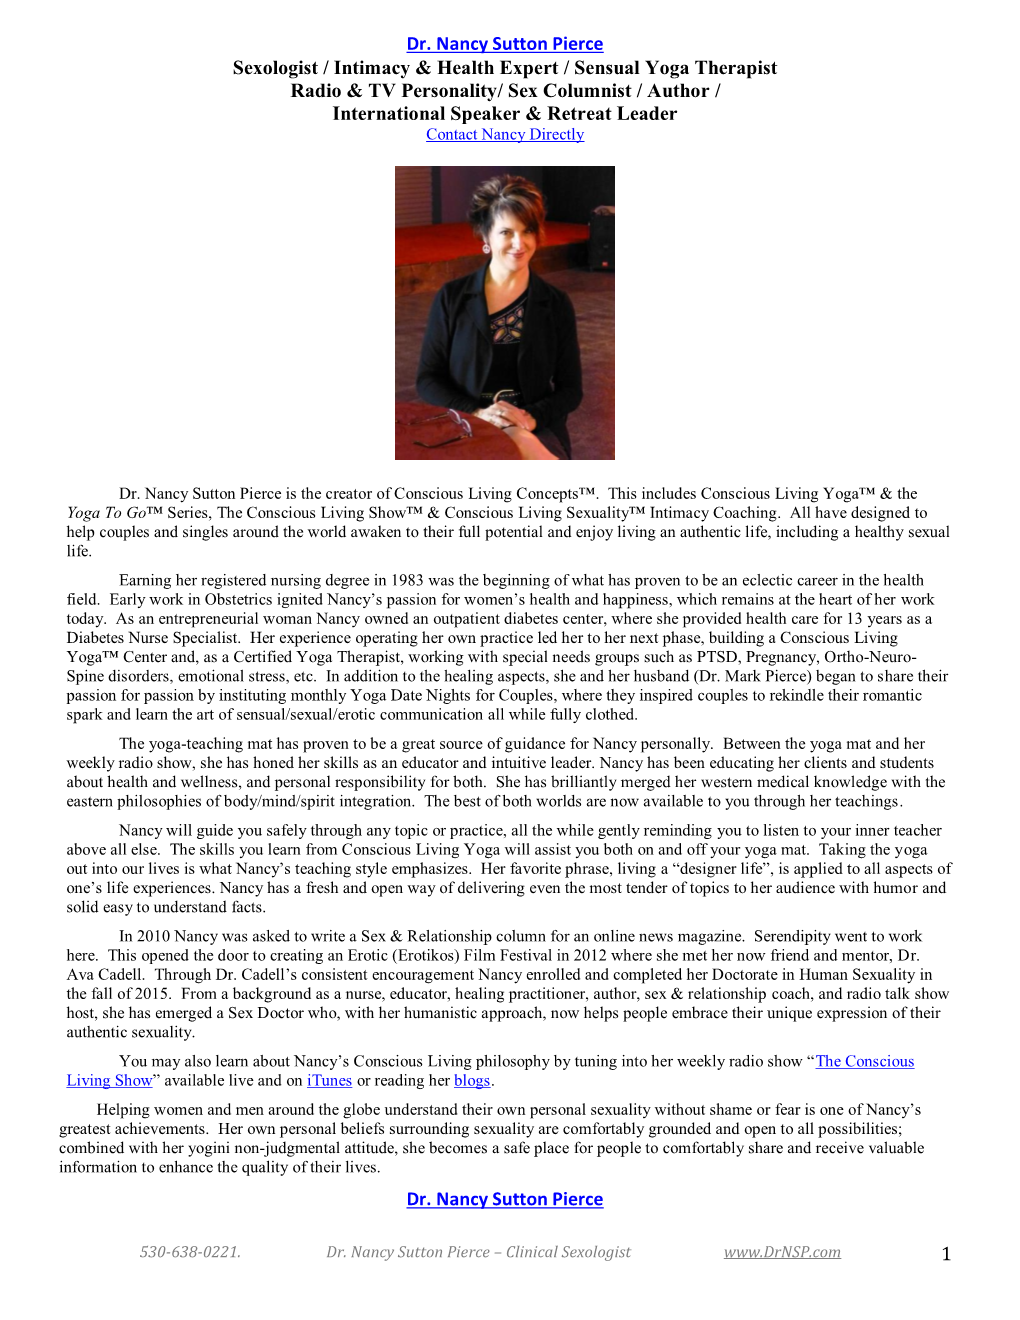 1 Dr. Nancy Sutton Pierce Sexologist / Intimacy & Health Expert / Sensual